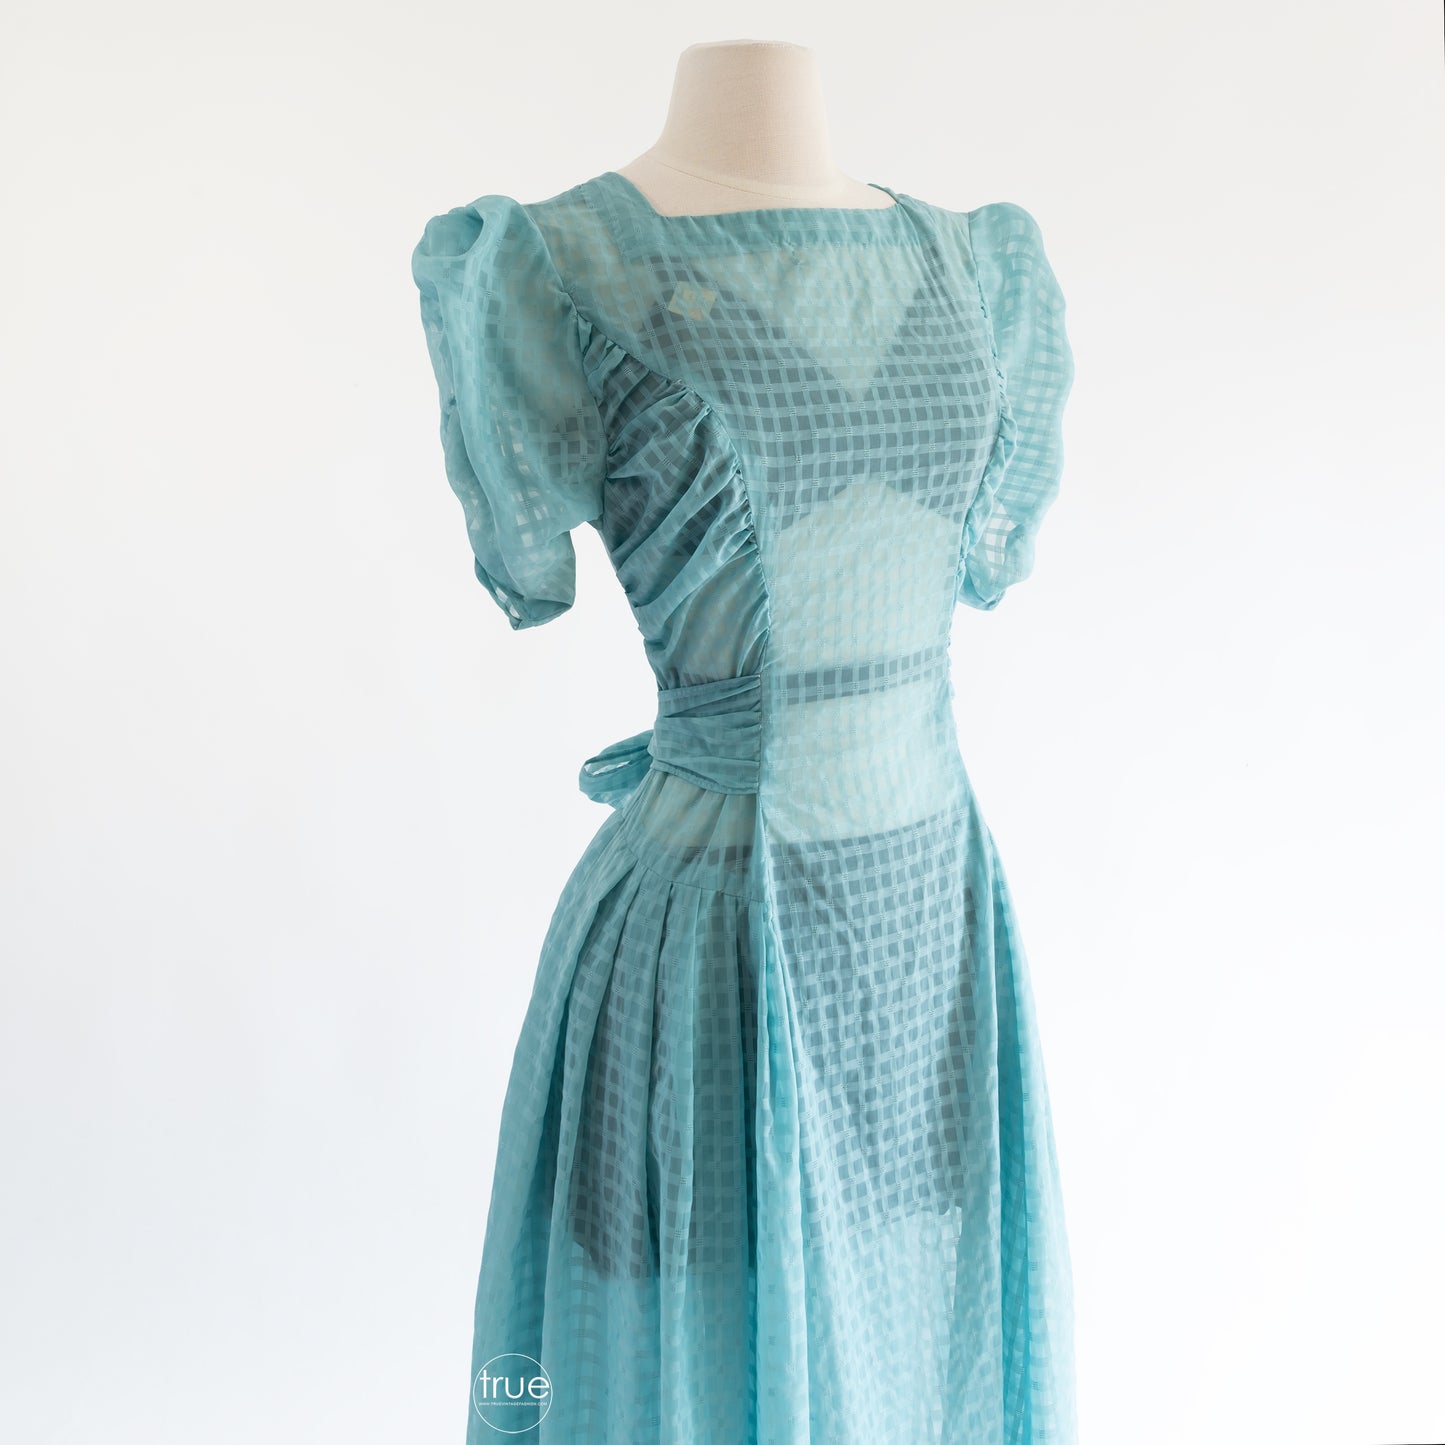 vintage 1940's dress ...sheer delight robins' egg blue window pane lattice weave ruched dress